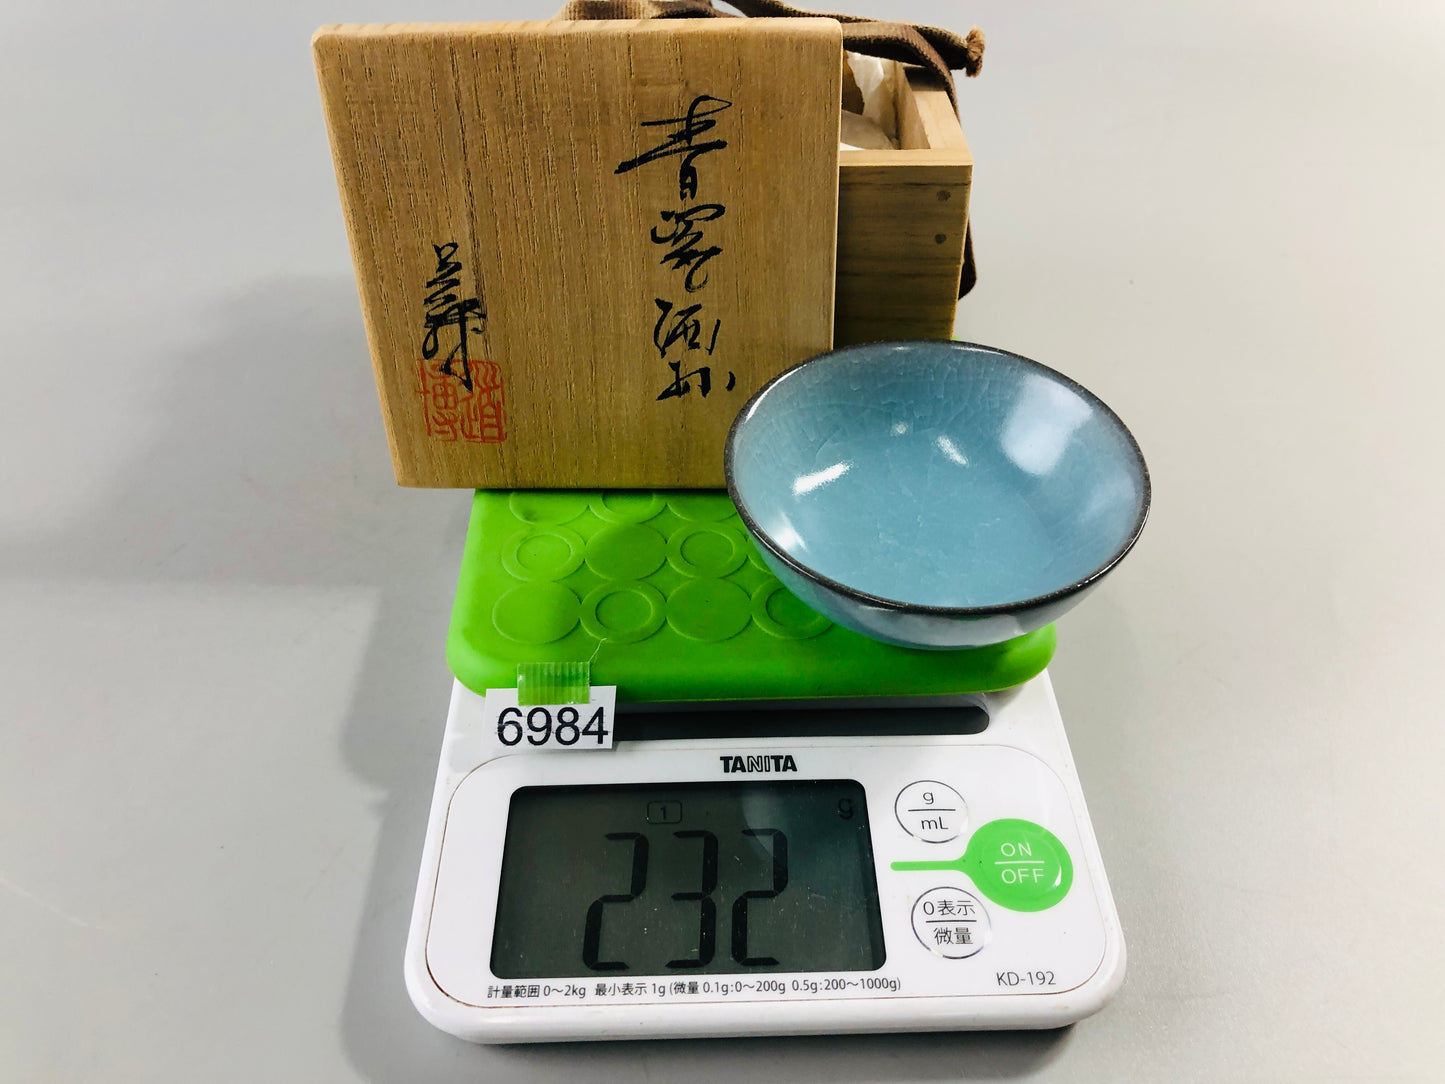 Y6984 [VIDEO] CHAWAN Celadon Sake cup signed box Japan antique alcohol tableware kitchen